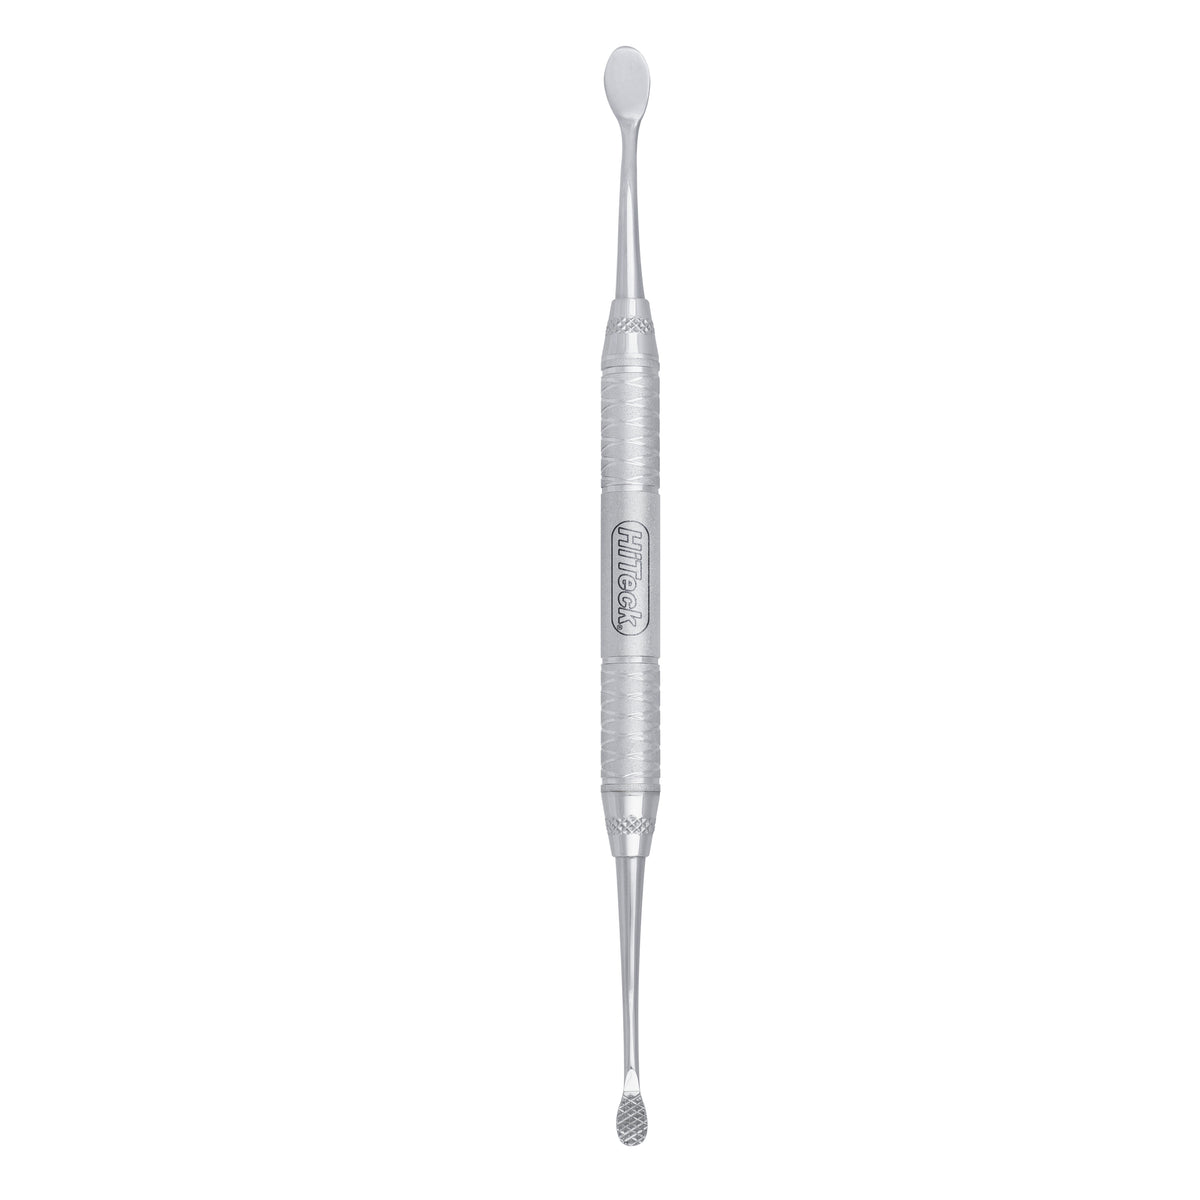 1X Miller Colburn, Cross Cut Surgical Bone File - HiTeck Medical Instruments